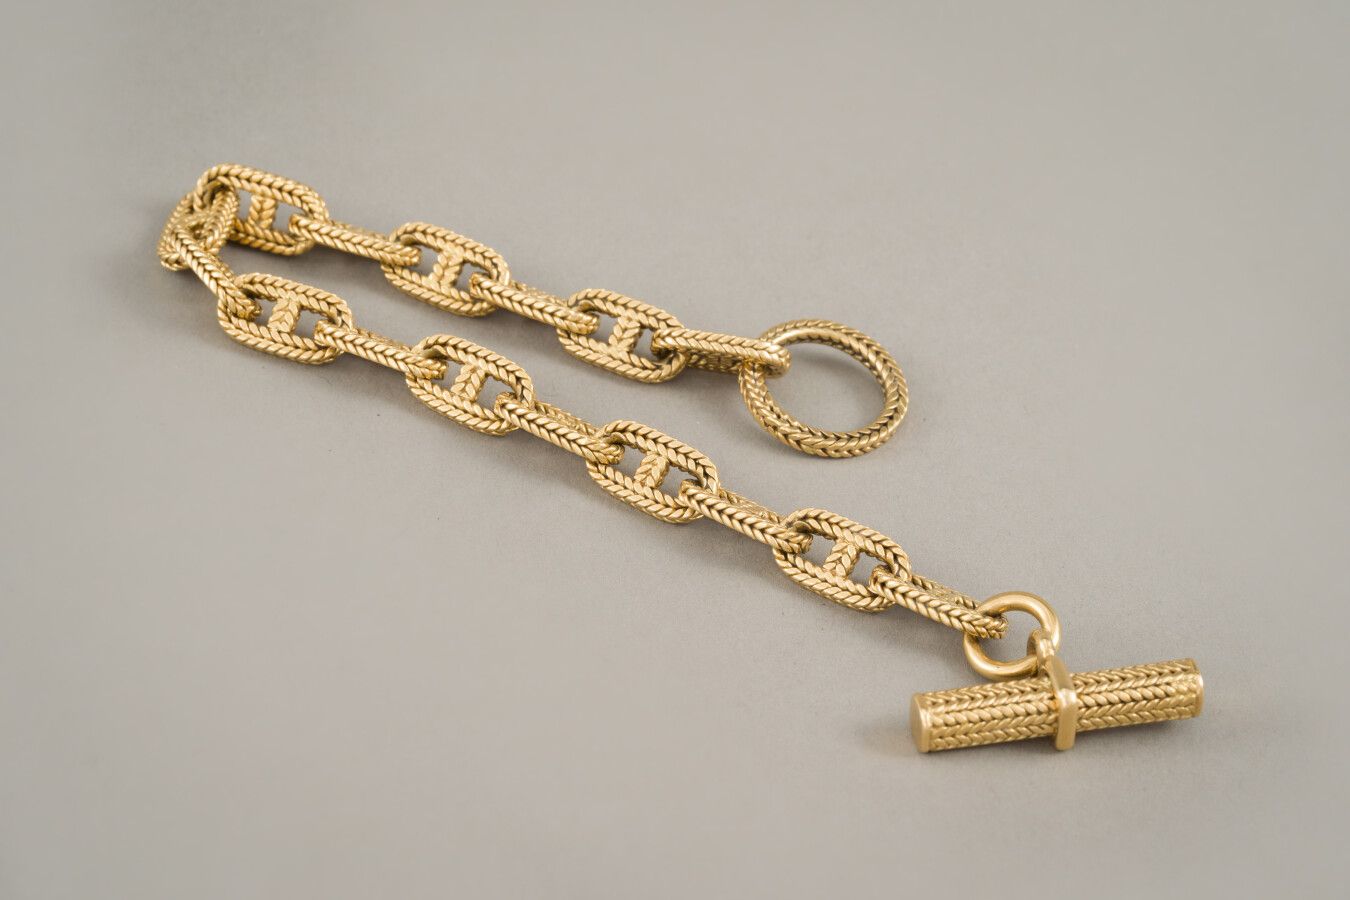 Null 96.锚链 "黄金手镯

第750/1000枚（18克拉），签名为Hermès Paris N° 54981。

重量：35克。在其案件中。